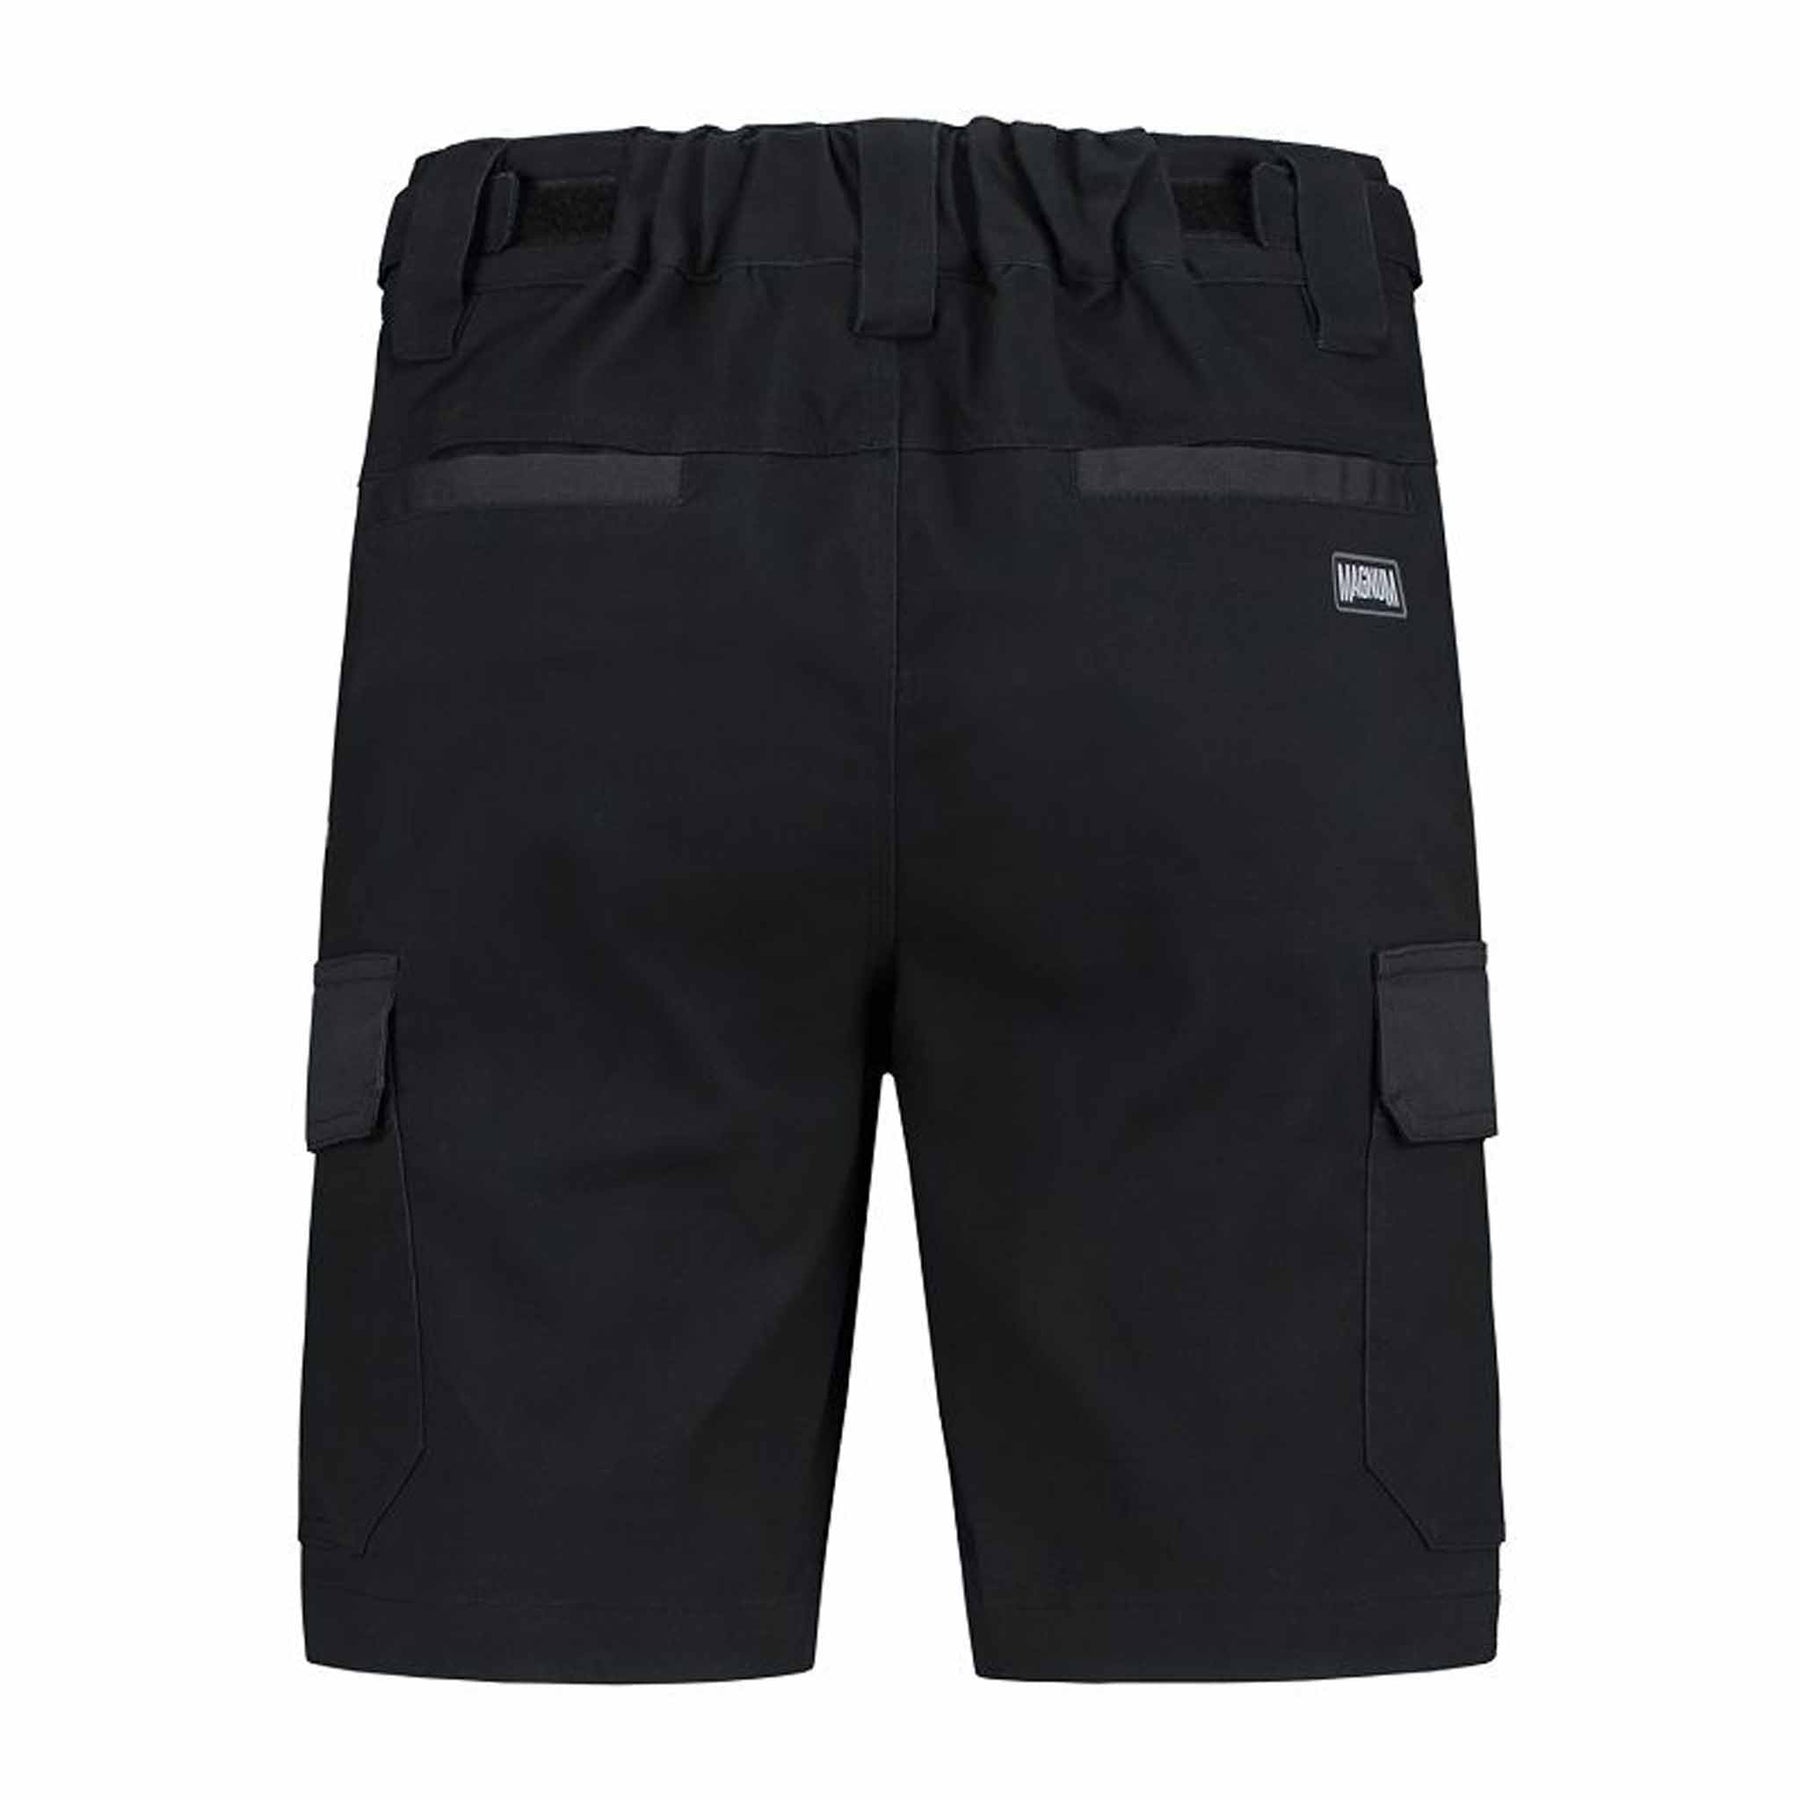 black shorts 247 series back view